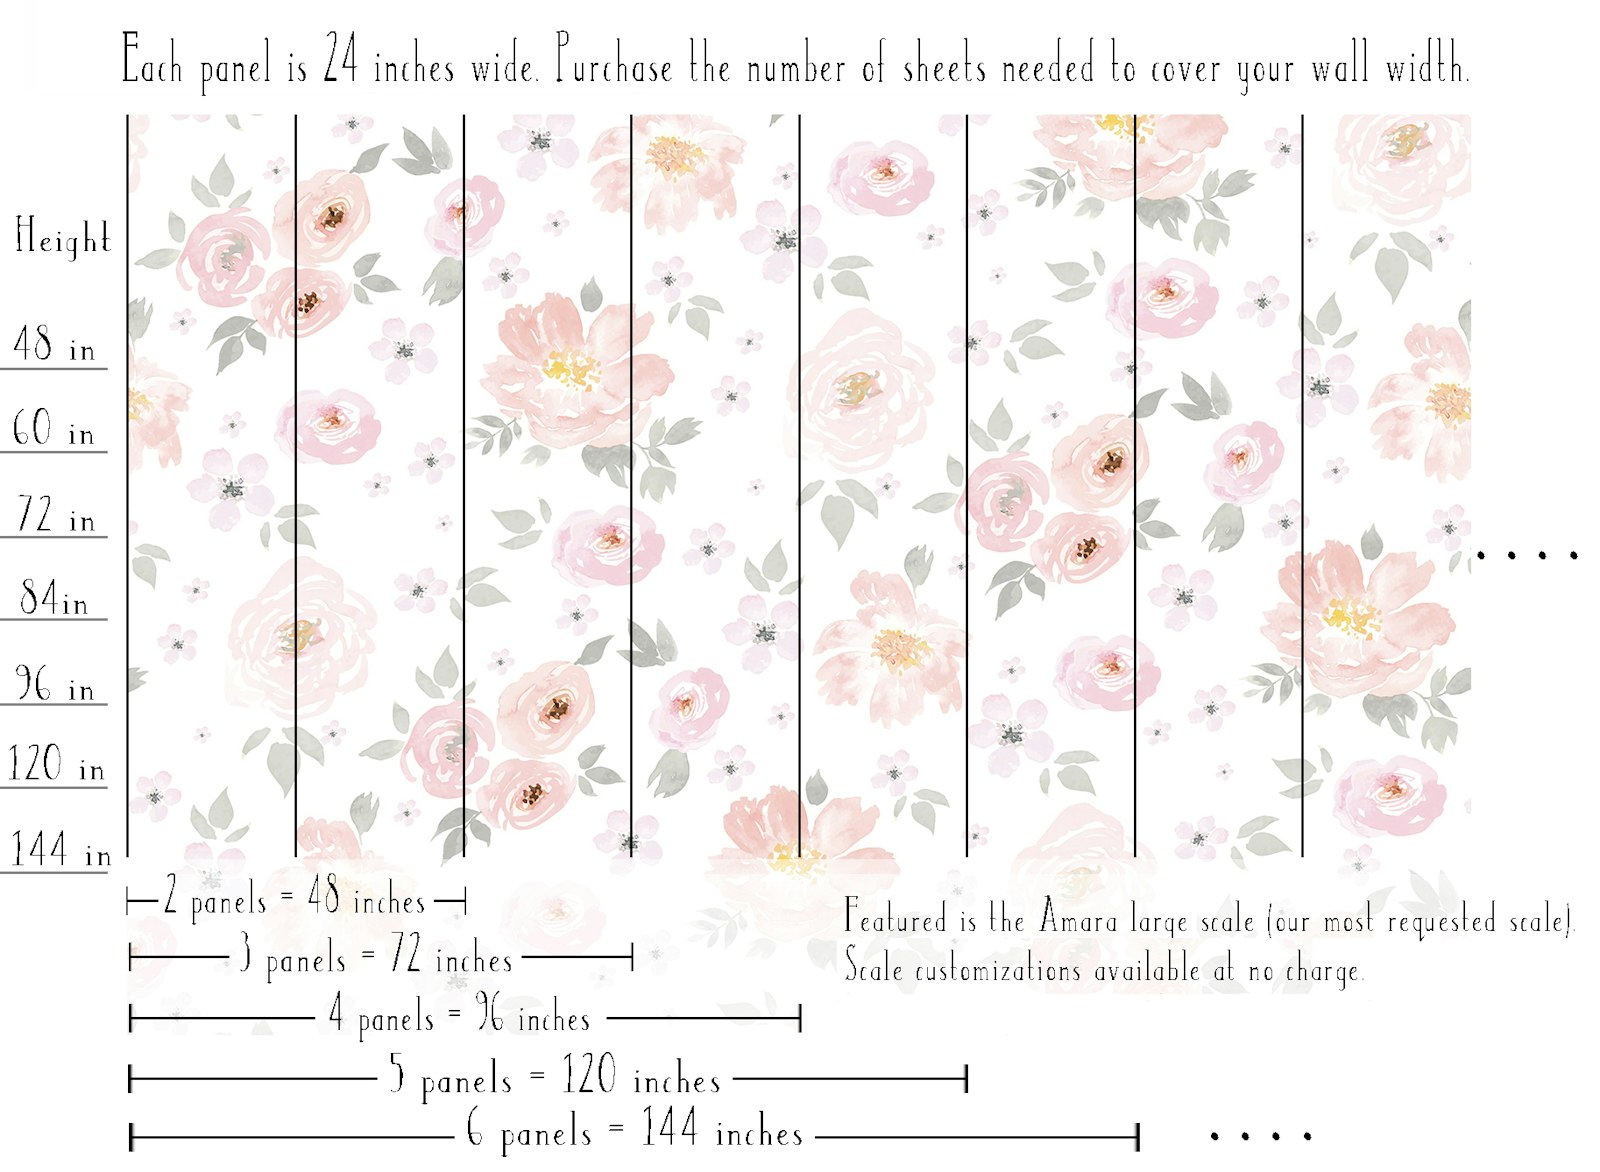 The Best Vintage Floral Pillow Covers 2023 - Caitlin Marie Design